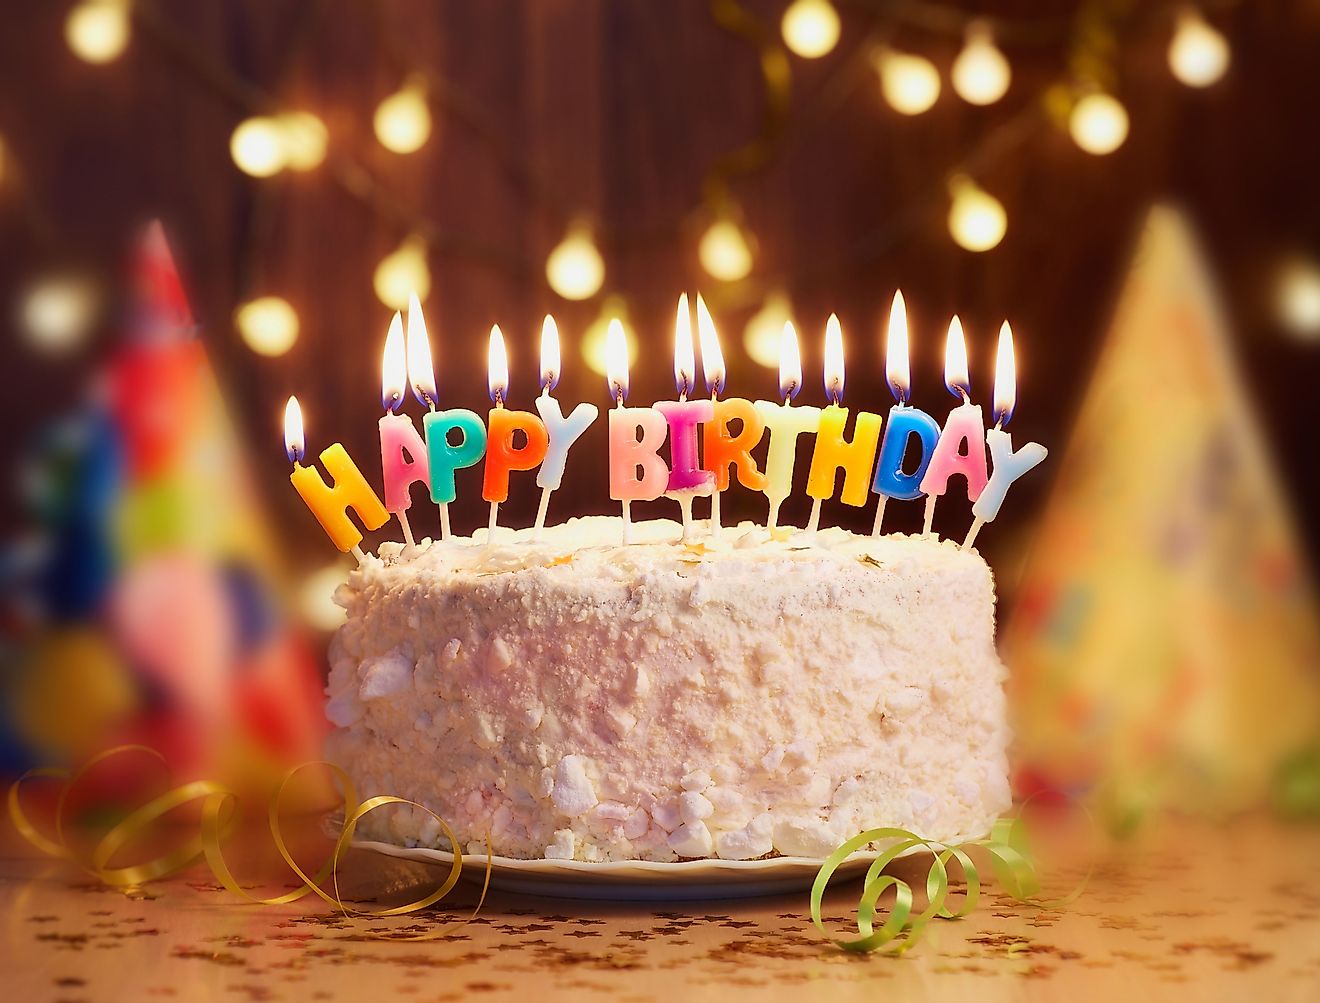 Birthday cake with candles. Image credit Studio Romantic via shutterstock